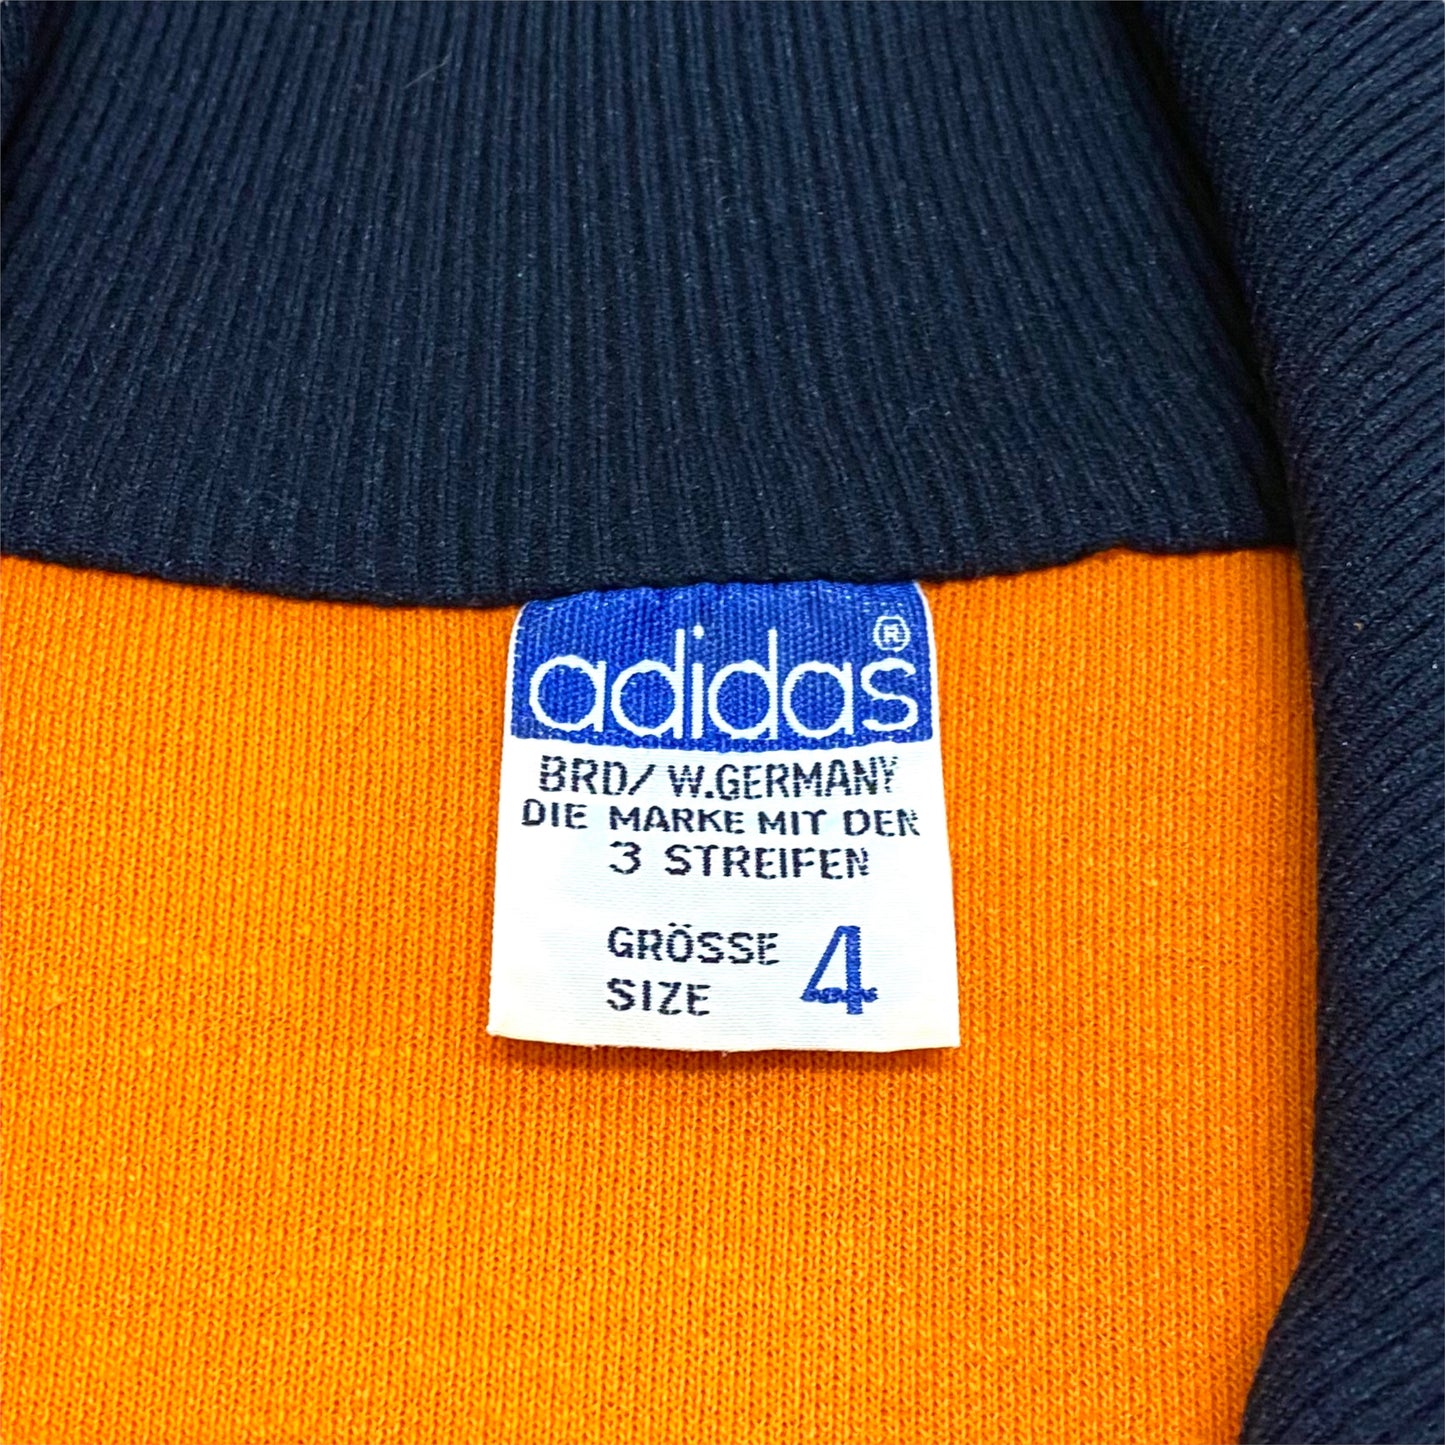 70-80’s "adidas" Track jacket